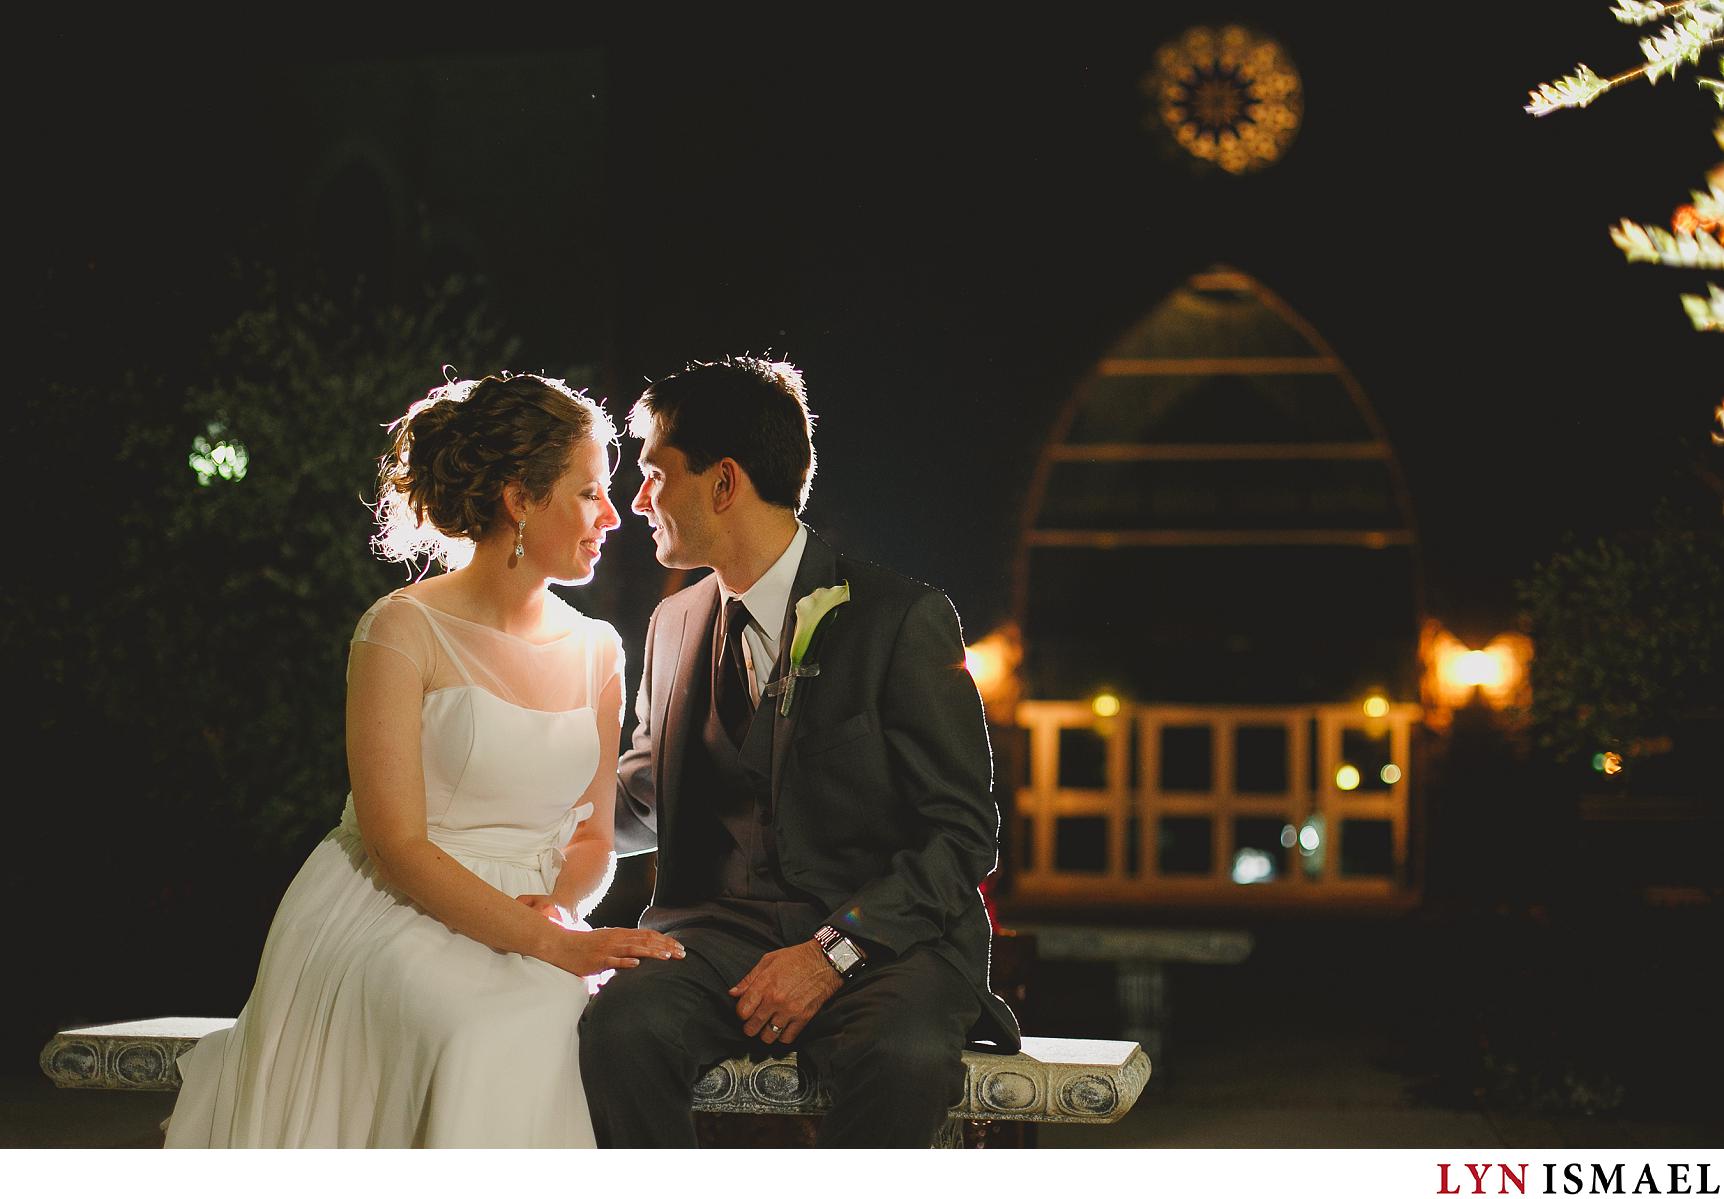 Stoney Creek wedding photographer photographs a night portrait of the bride and groom